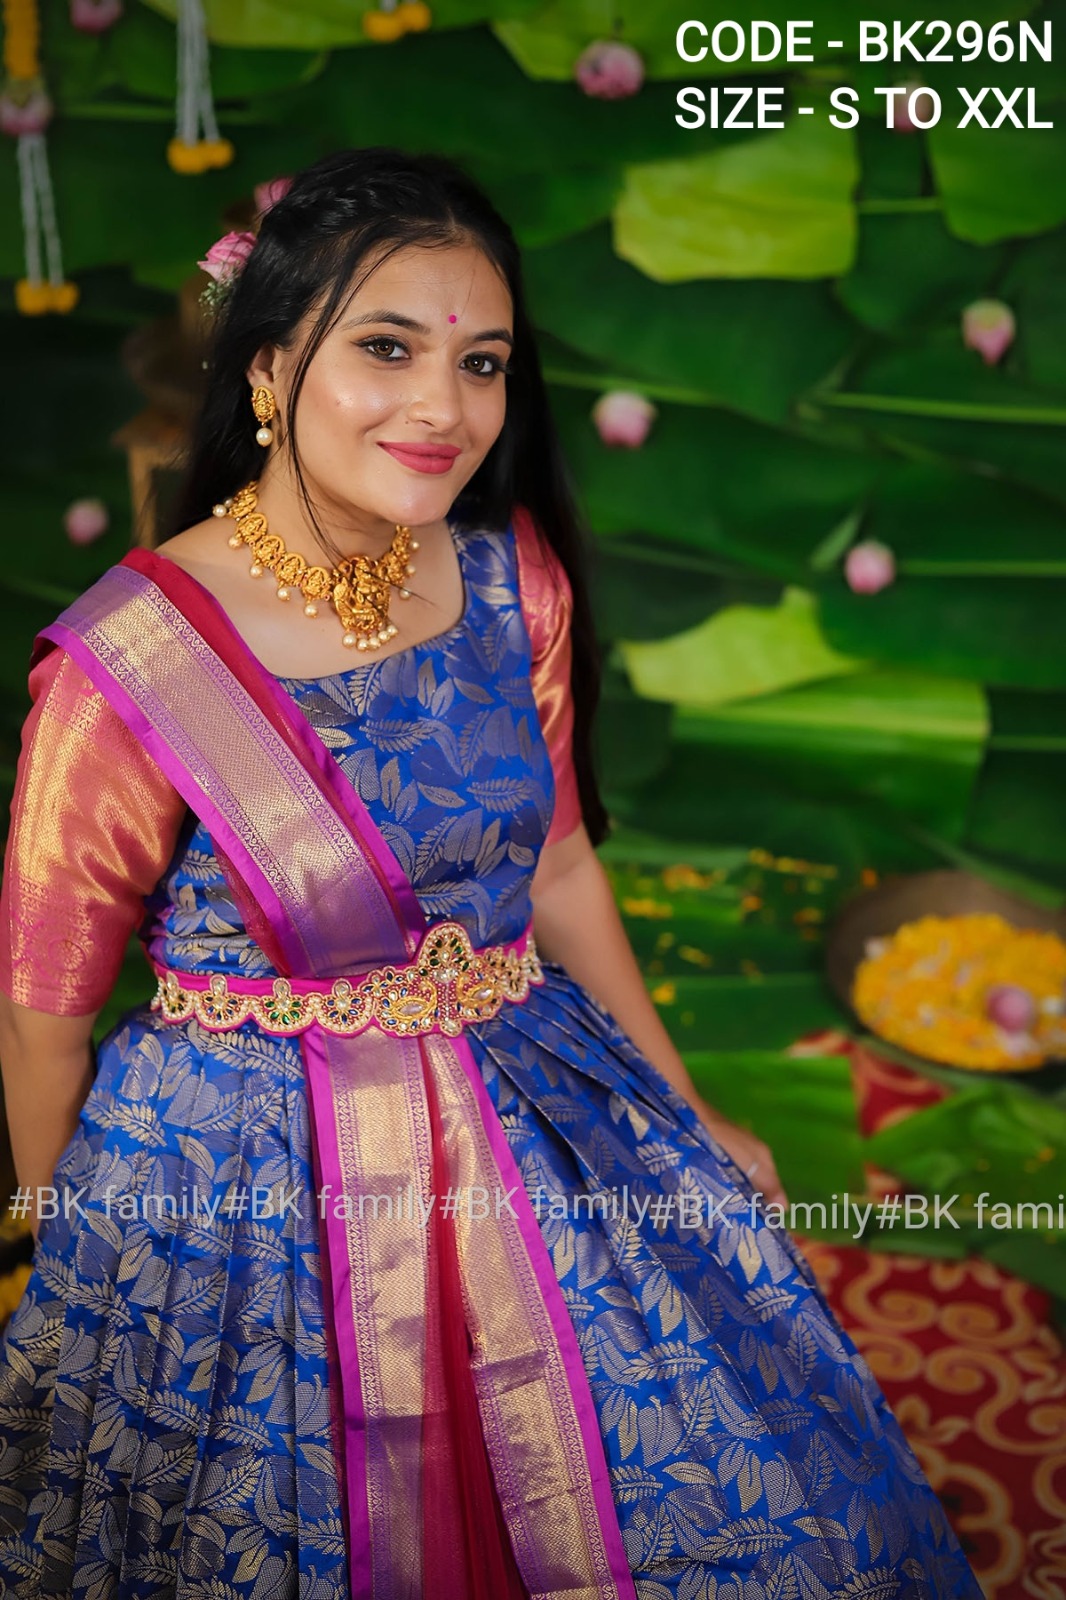 Pretty Girl in Half Saree - Indian Dresses